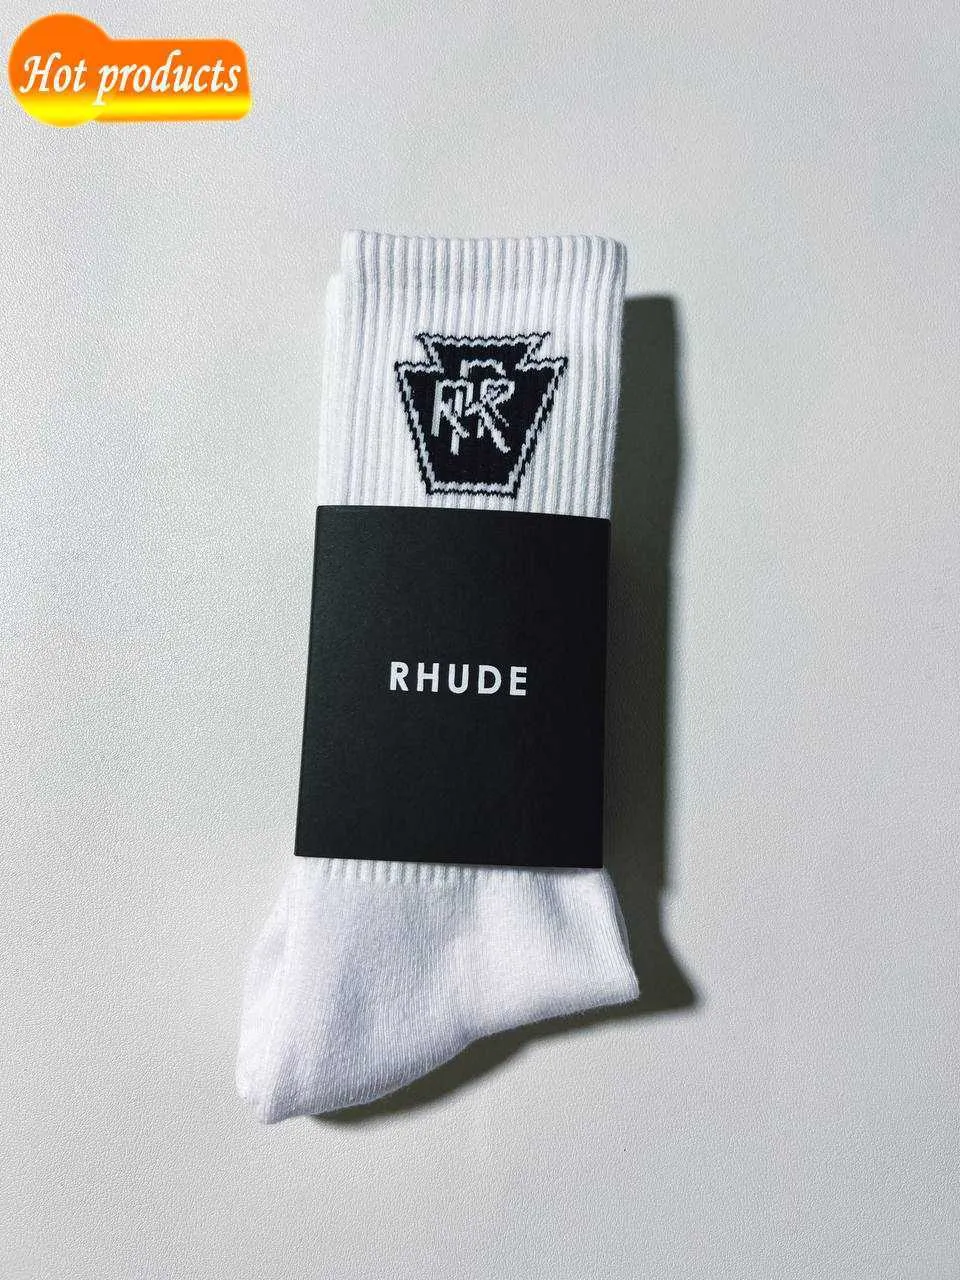 Rhude Sock Men Designer Socks Luxury High Quality Pure Cotton Comfort deodorization吸収汗をかくエアストッキングファッション人気ブラックスポーツソックスJ7VH